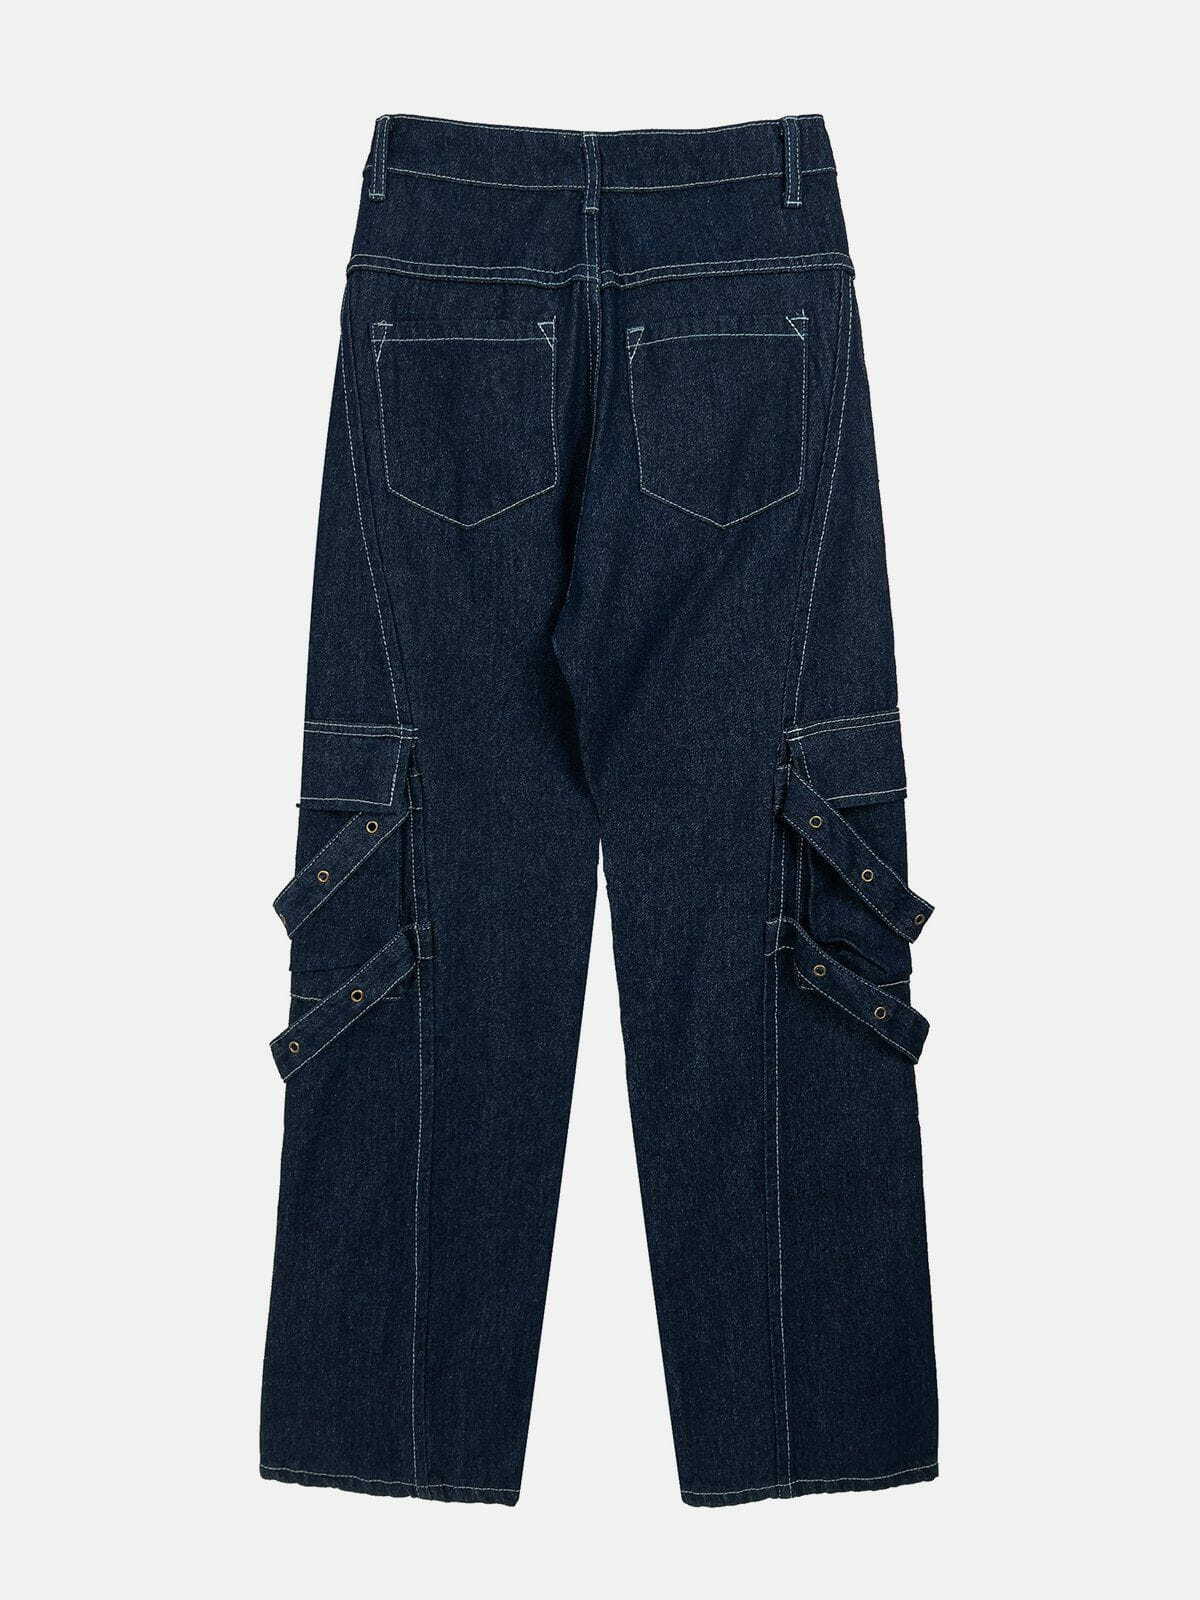 strap detail spliced jeans edgy streetwear essential 5521